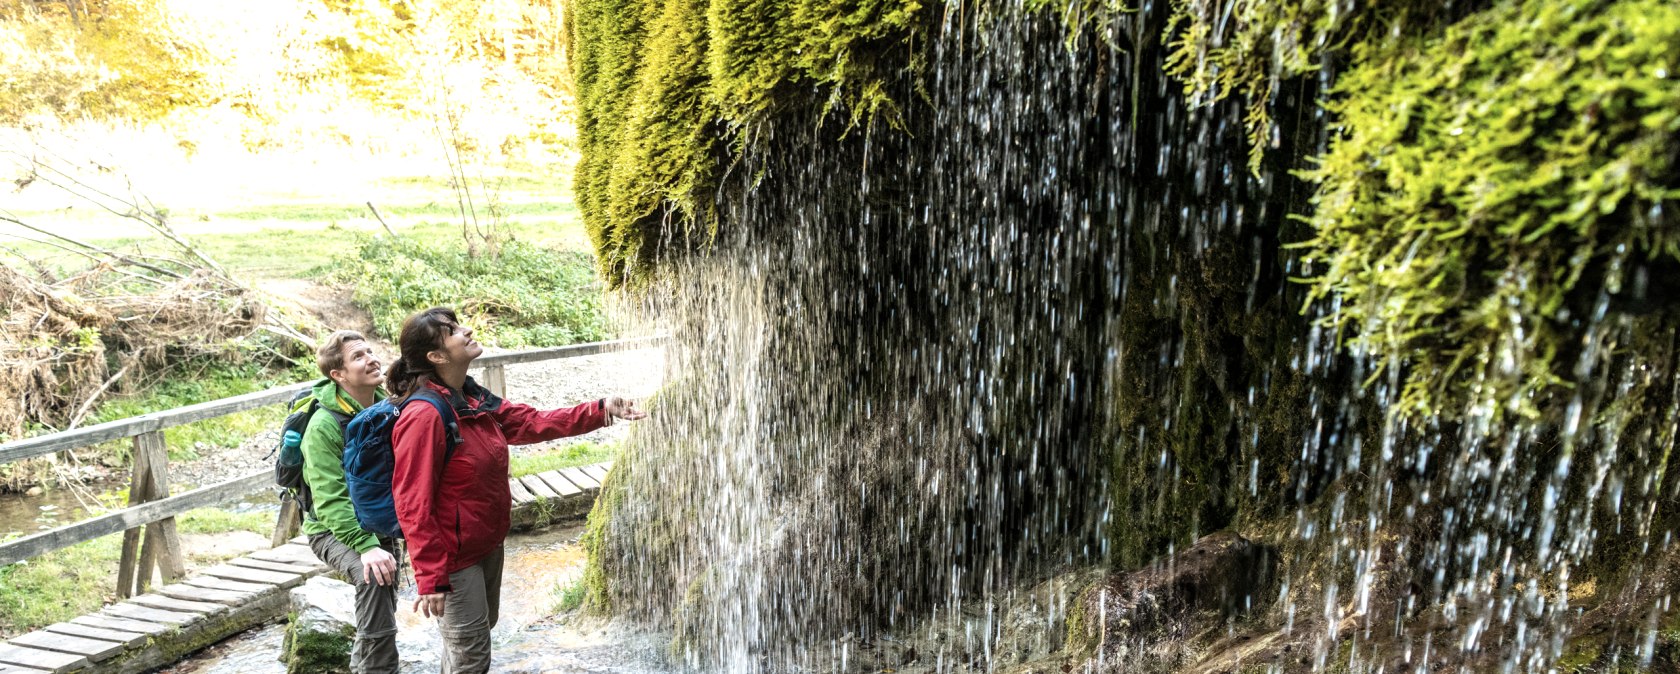 Erfrischung am Wasserfall Dreimühlen am Eifelsteig, © Eifel Tourismus GmbH, D. Ketz